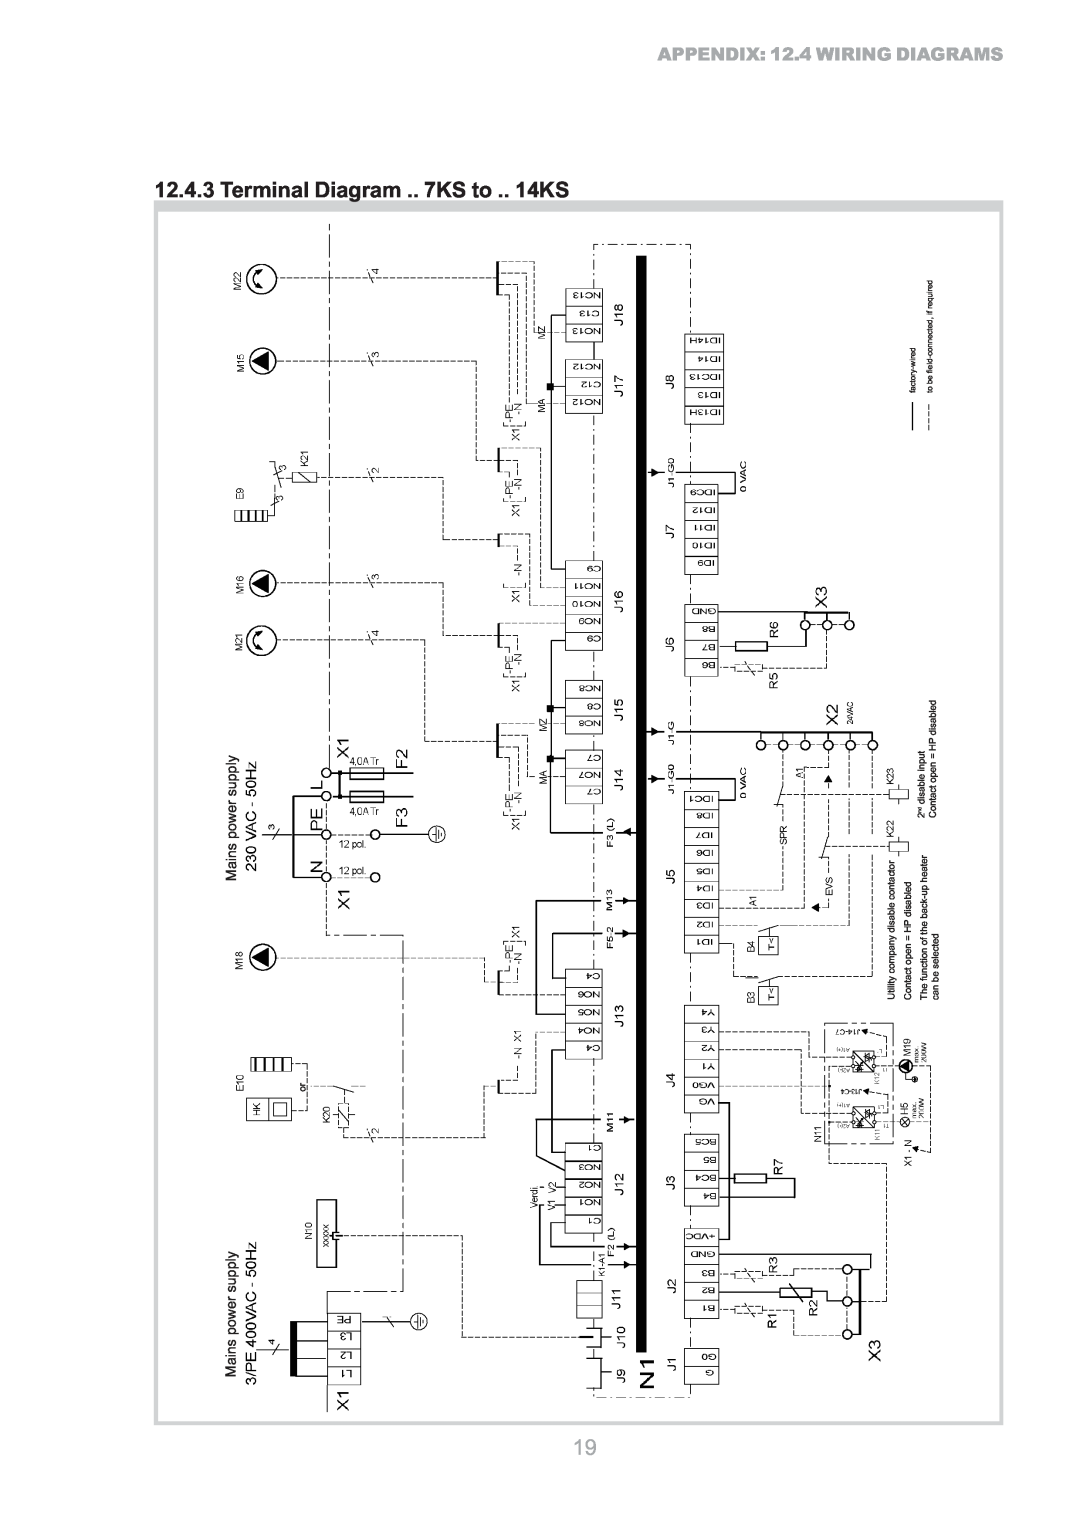 Dimplex S1 7KS Terminal Diagram .. 7KS to .. 14KS, APPENDIX 12.4 WIRING DIAGRAMS, Utility company disable contactor 